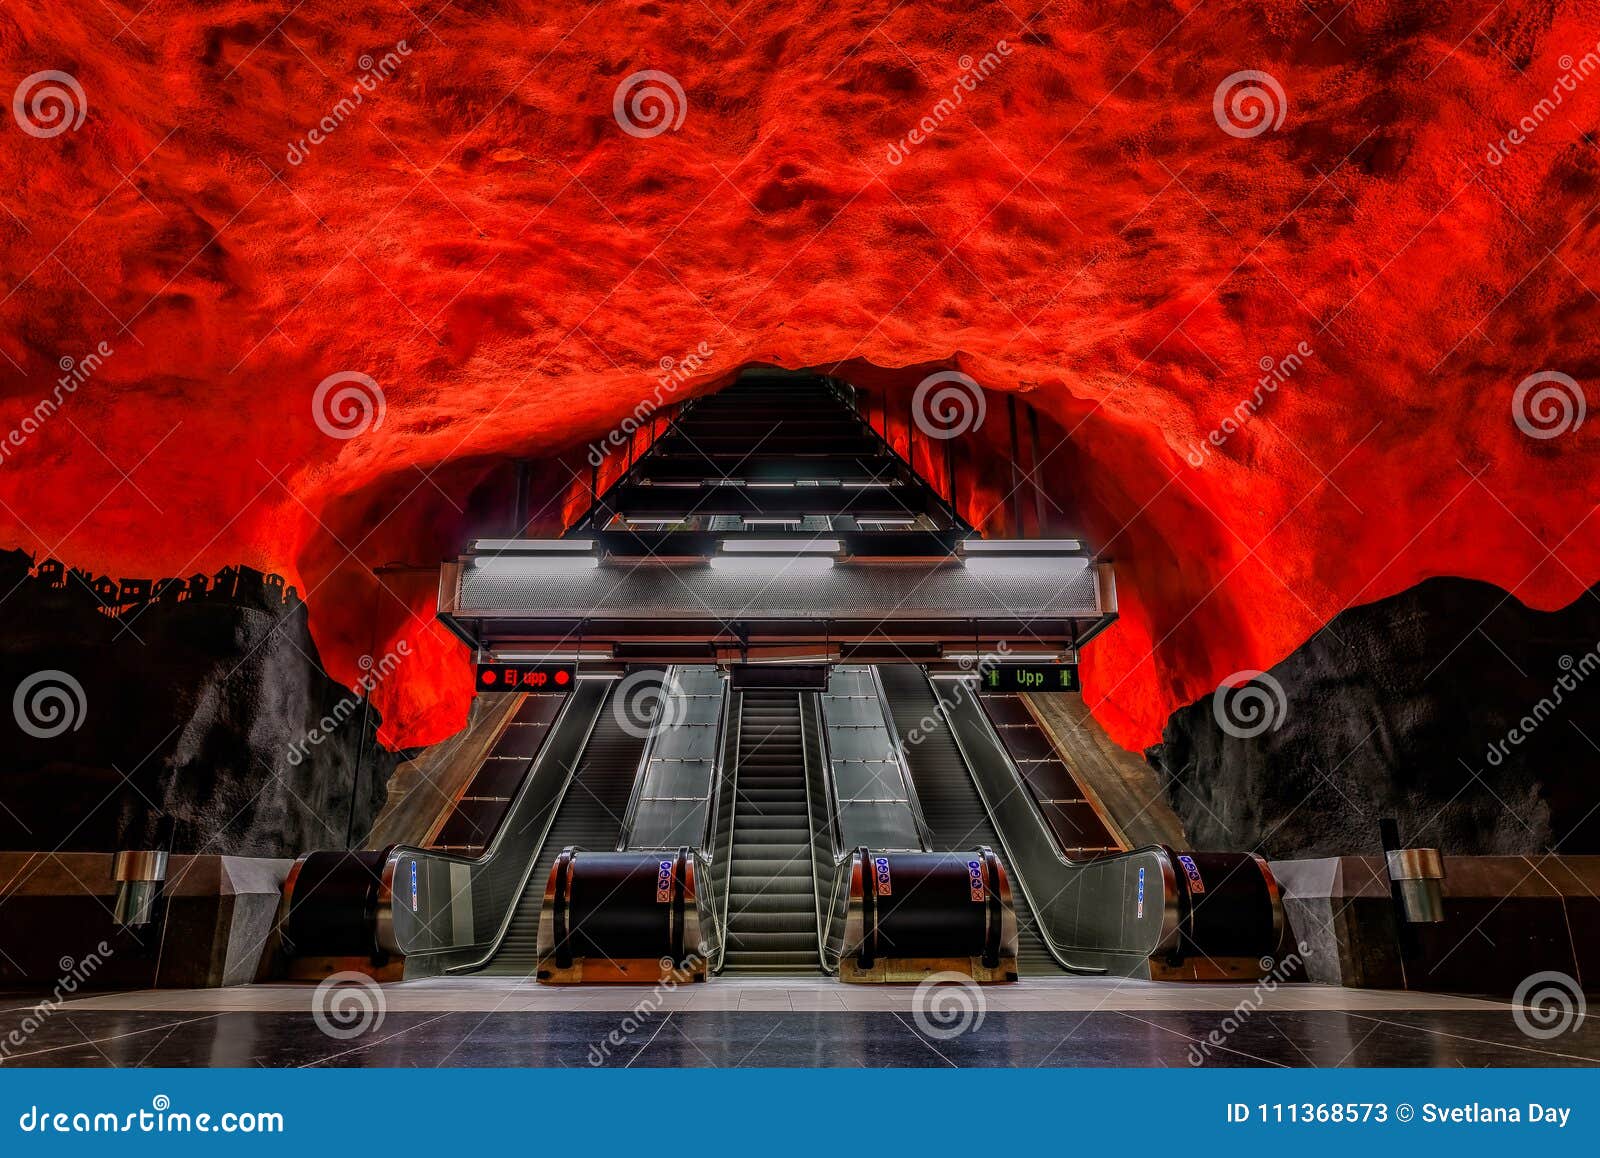 stockholm metro or tunnelbana station solna centrum with fire li